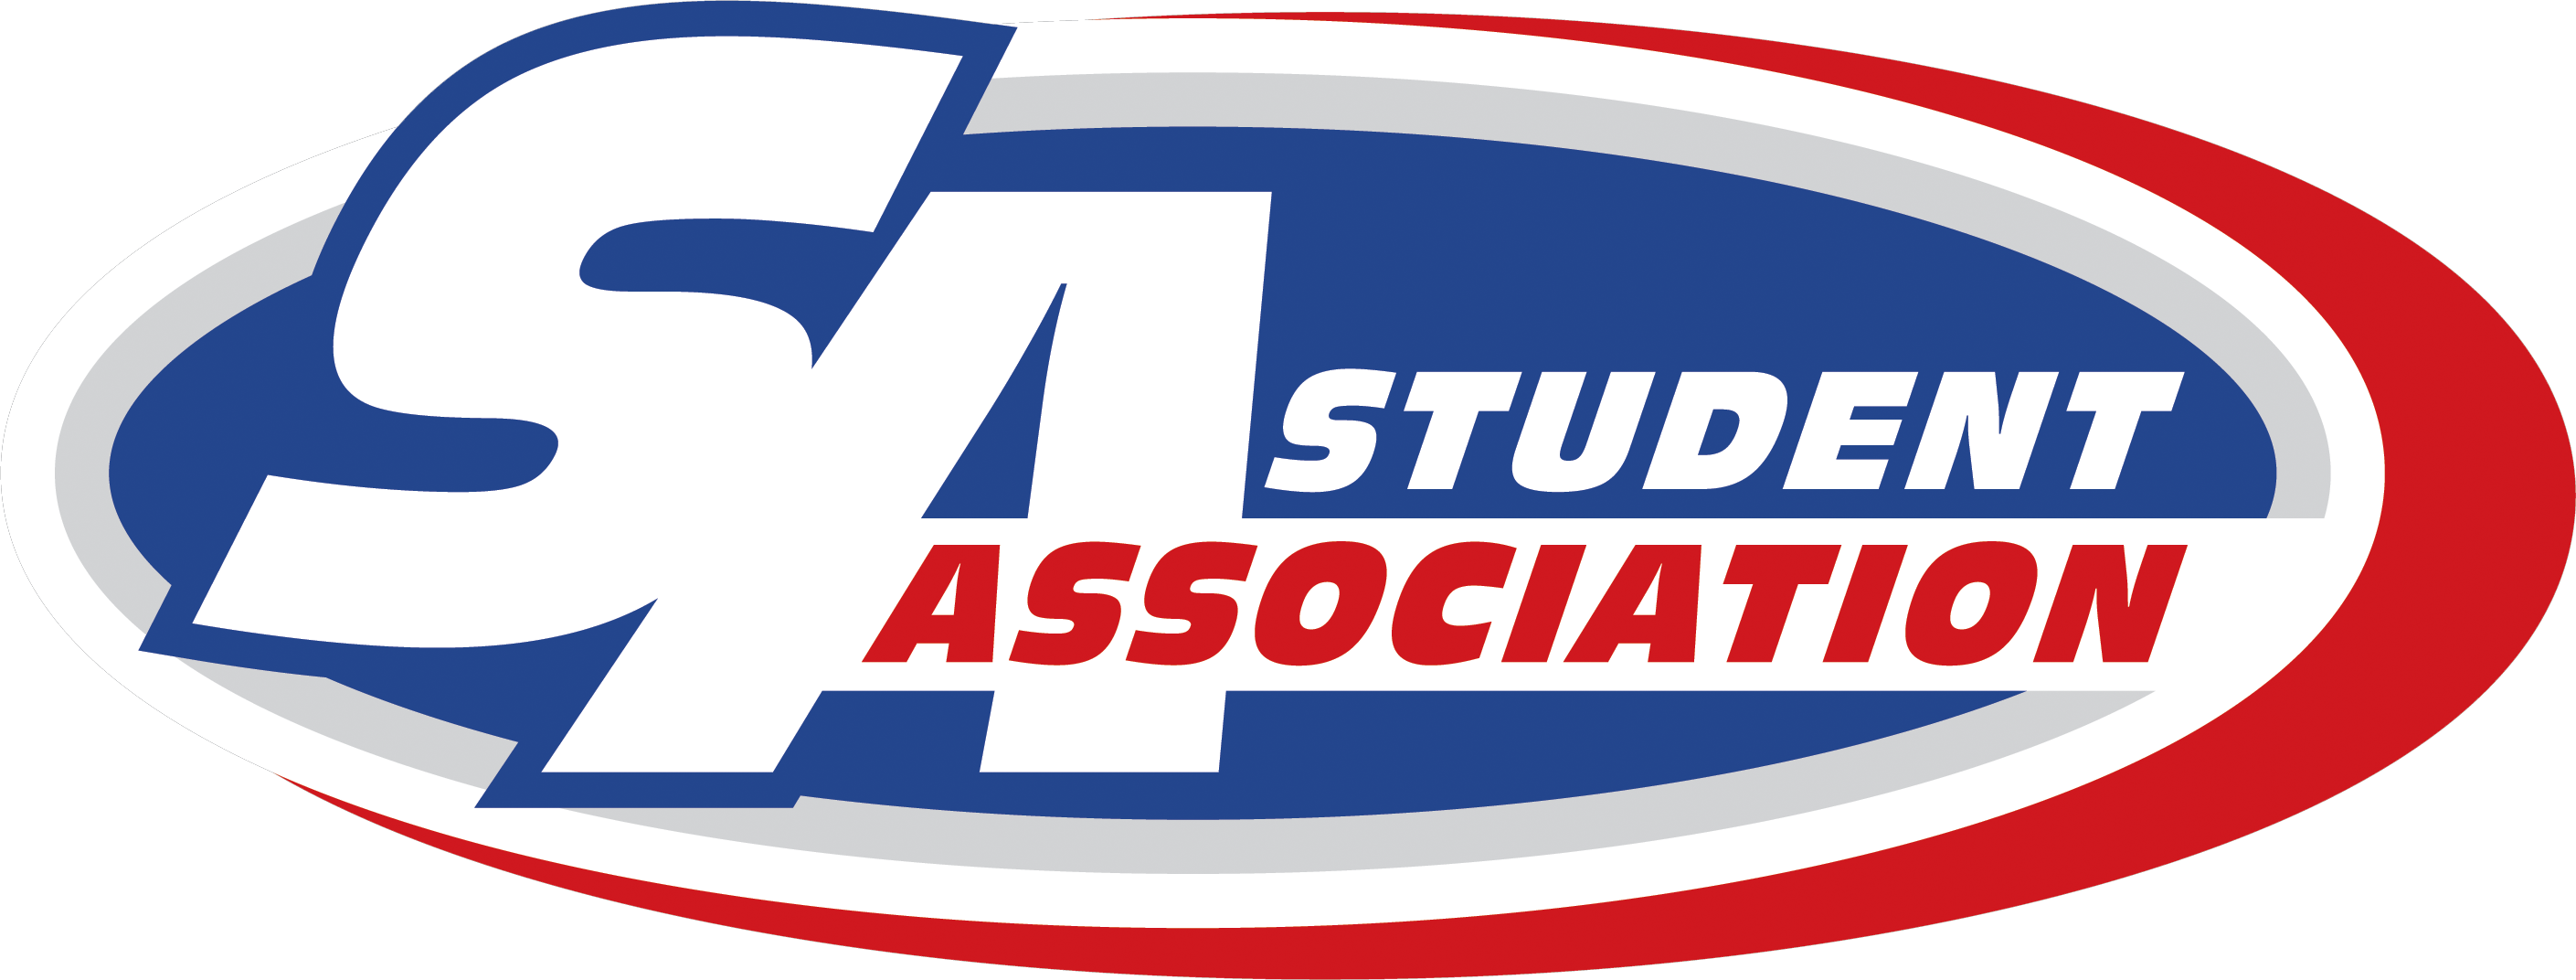 Medium Resolution Png - Ub Student Association Logo Clipart (2819x1072), Png Download